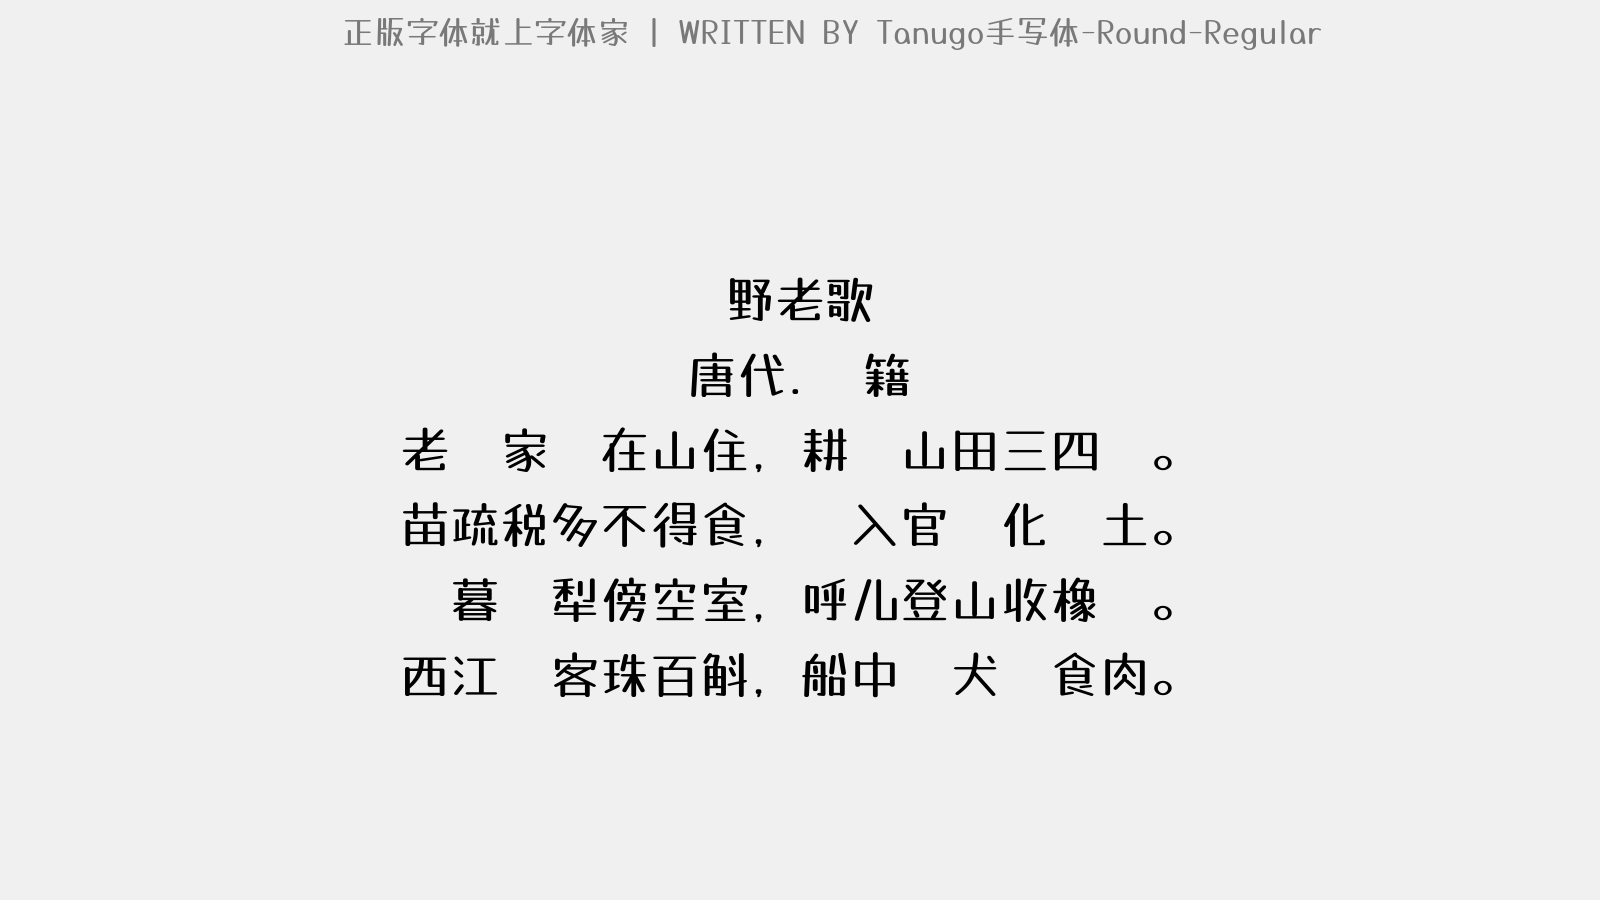 Tanugo手写体-Round-Regular - 野老歌 / 山农词